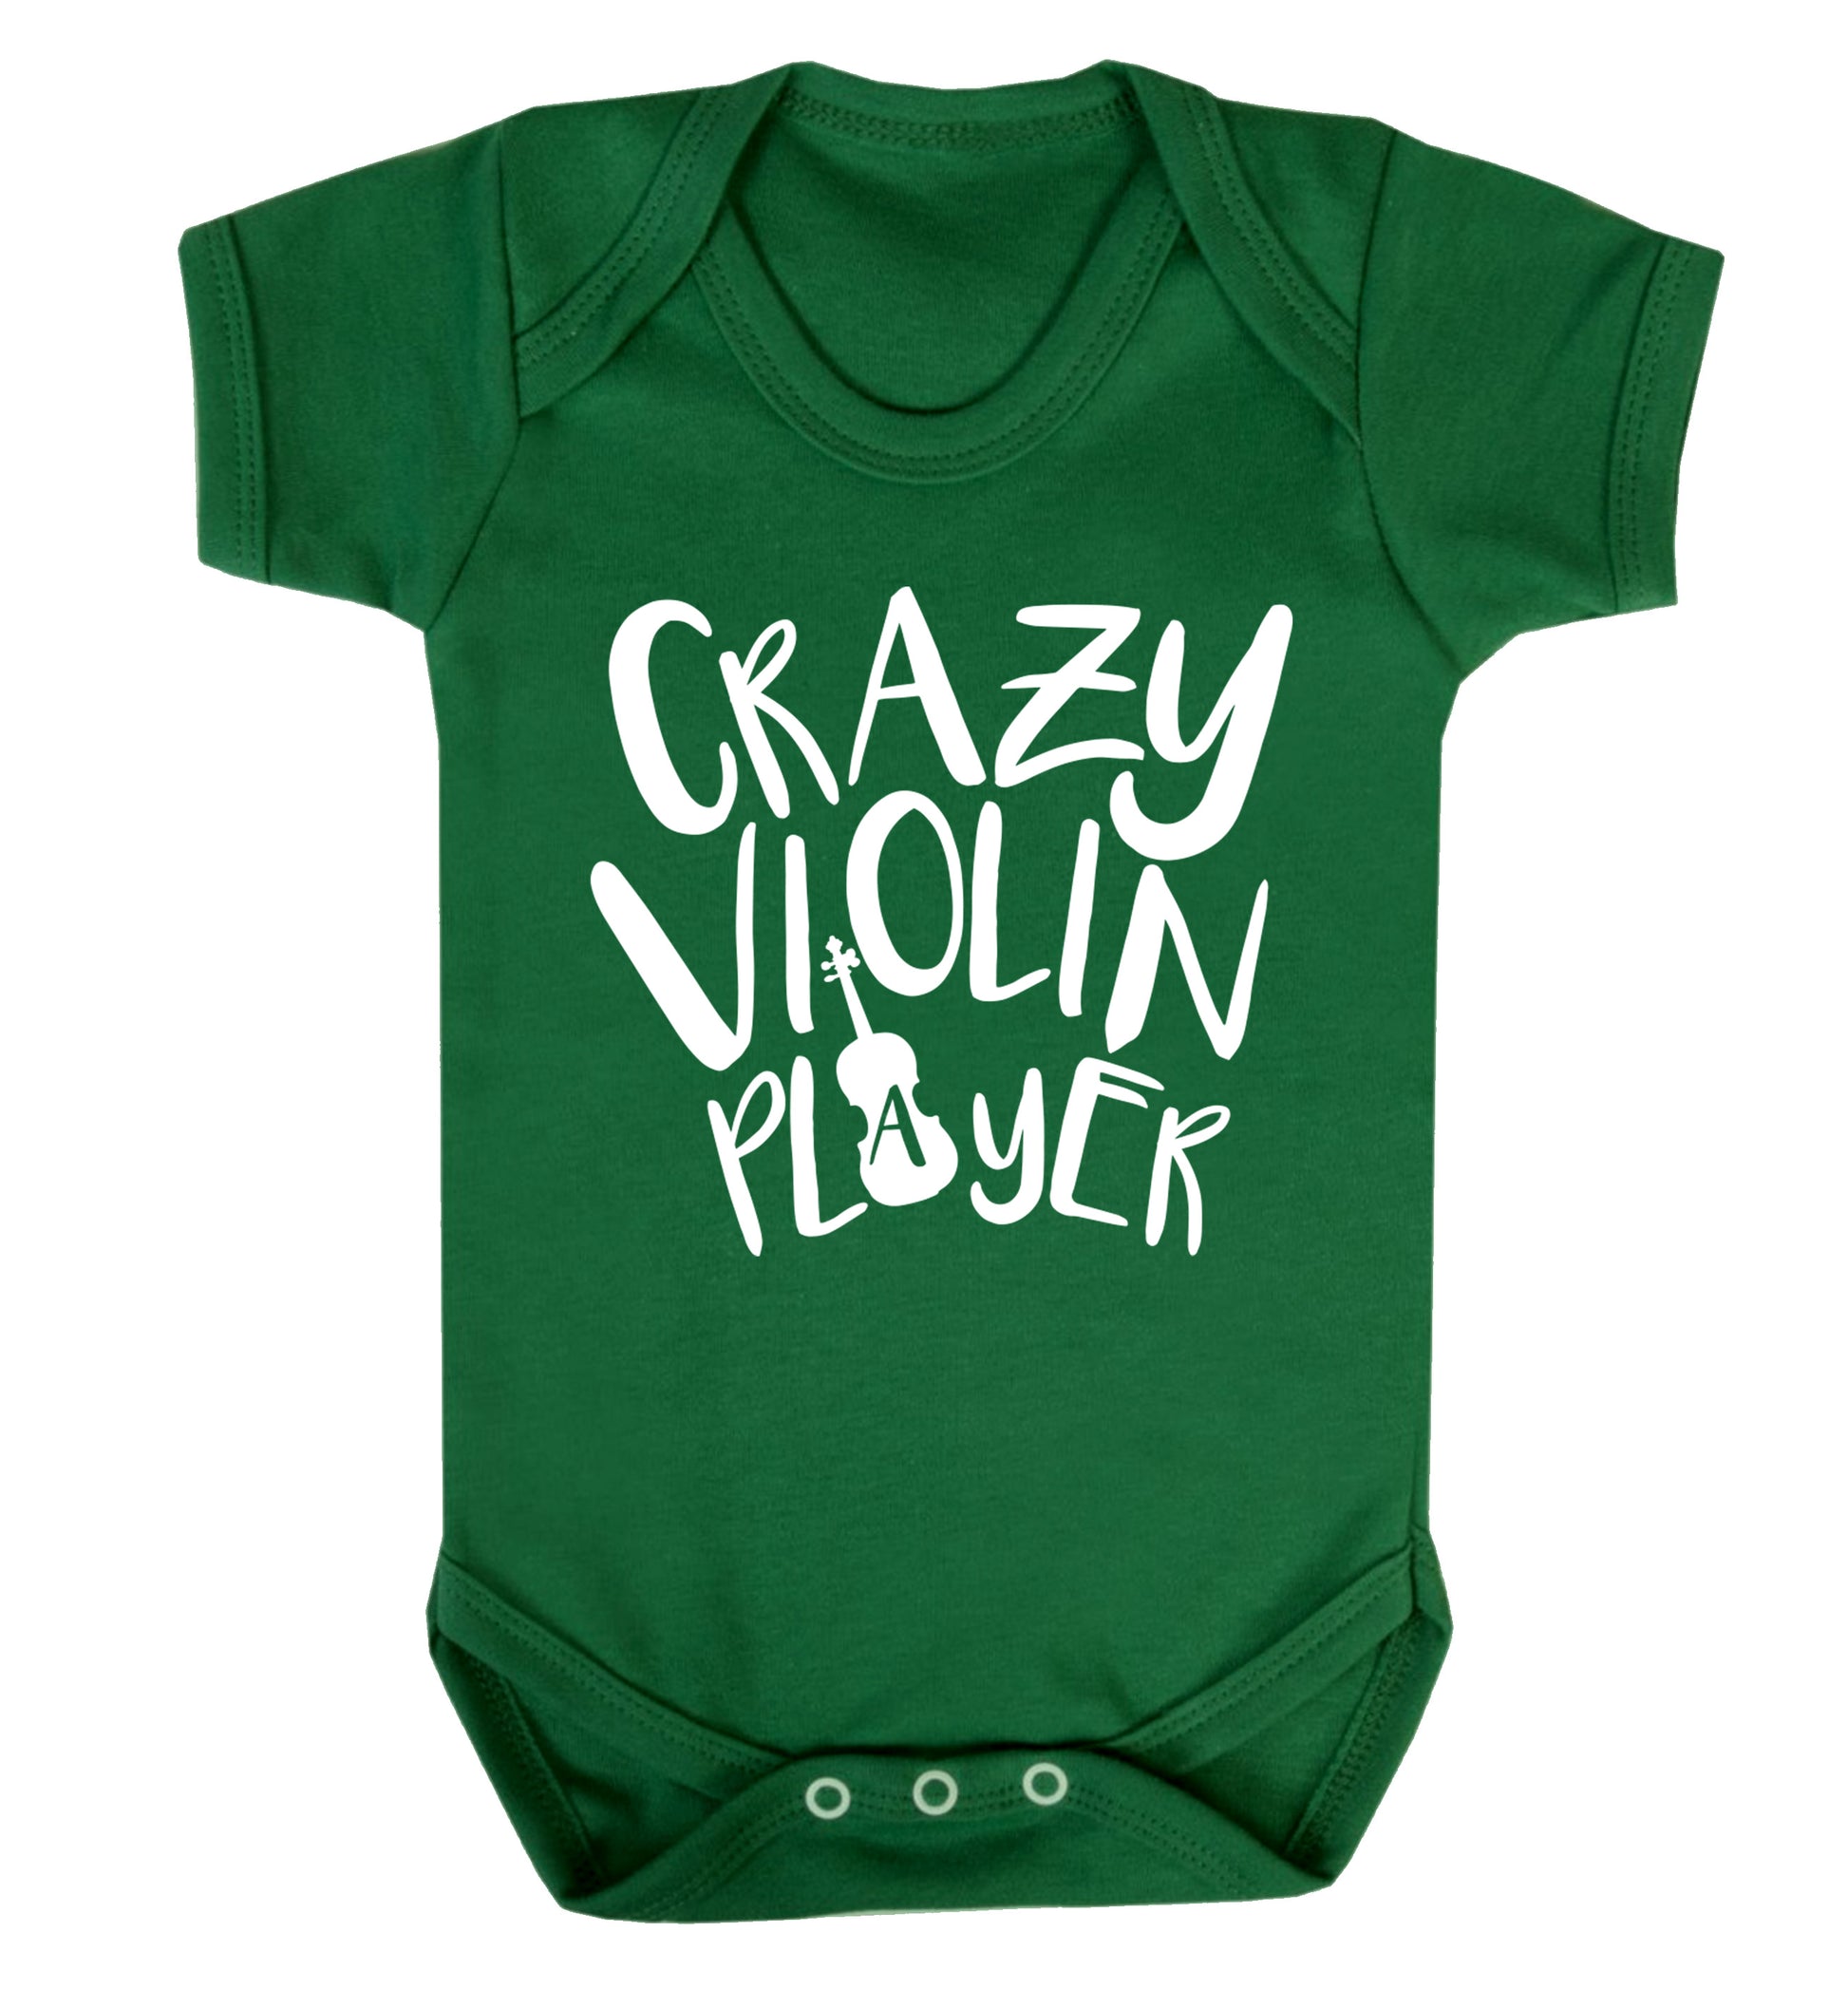 Crazy Violin Player Baby Vest green 18-24 months